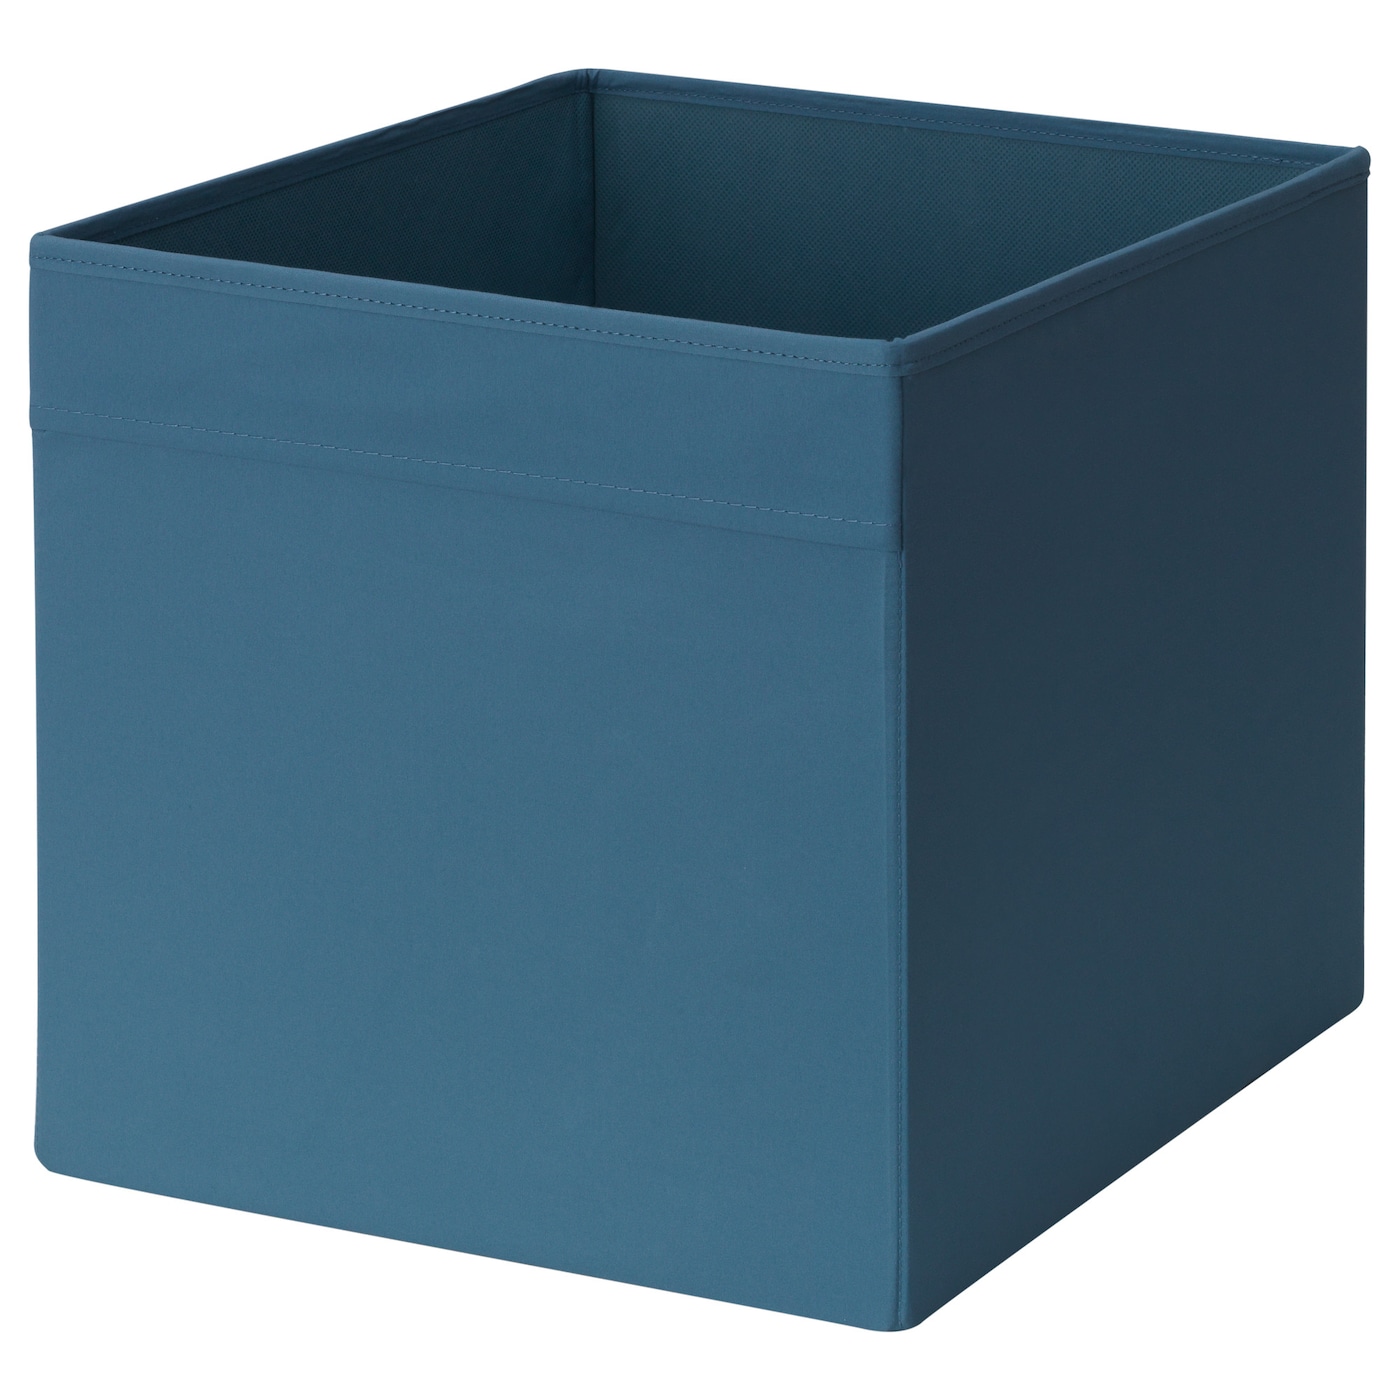 DRÖNA ДРЁНА Коробка, темно-синяя, 33x38x33 см IKEA коробка koffer синяя